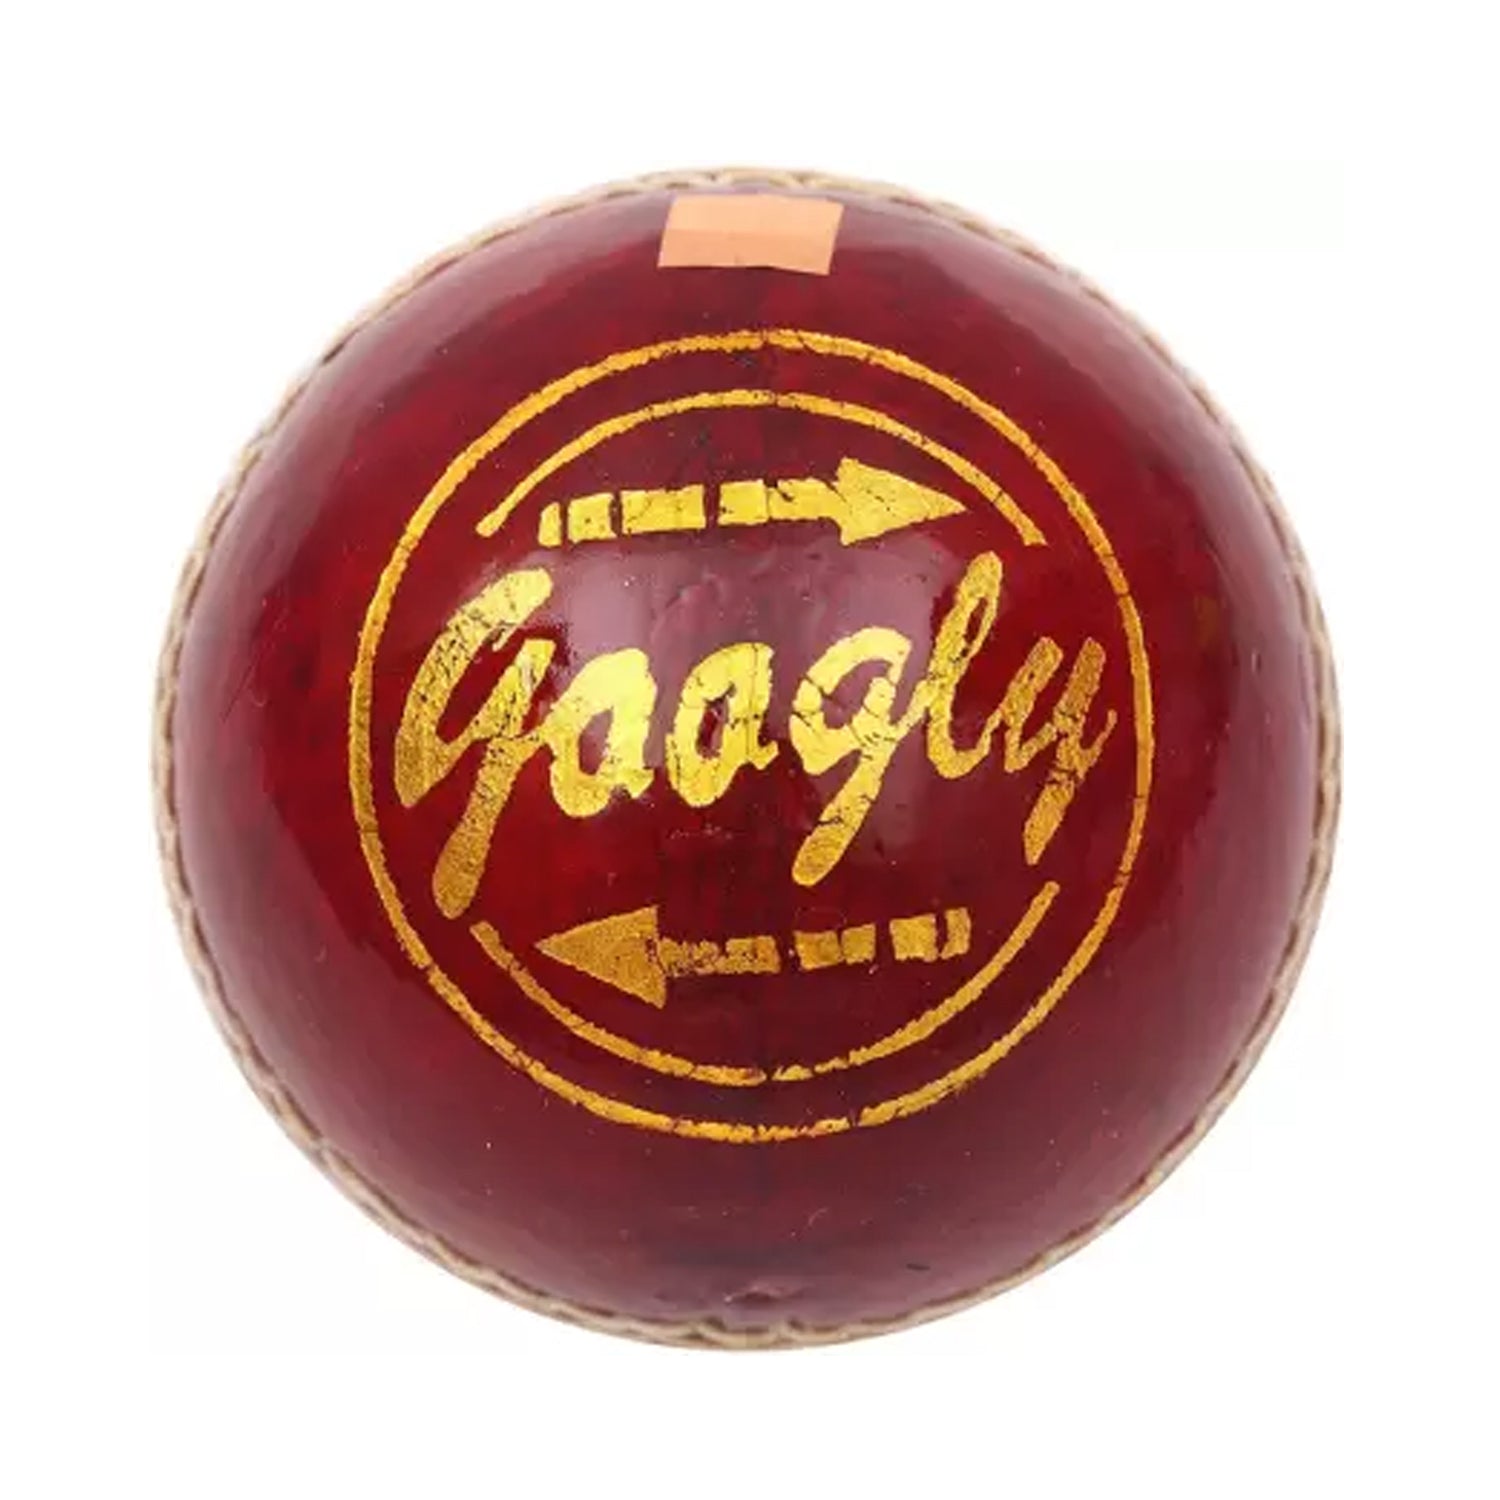 Vicky Googly Leather Cricket Ball, 1Pc (Red) - Best Price online Prokicksports.com